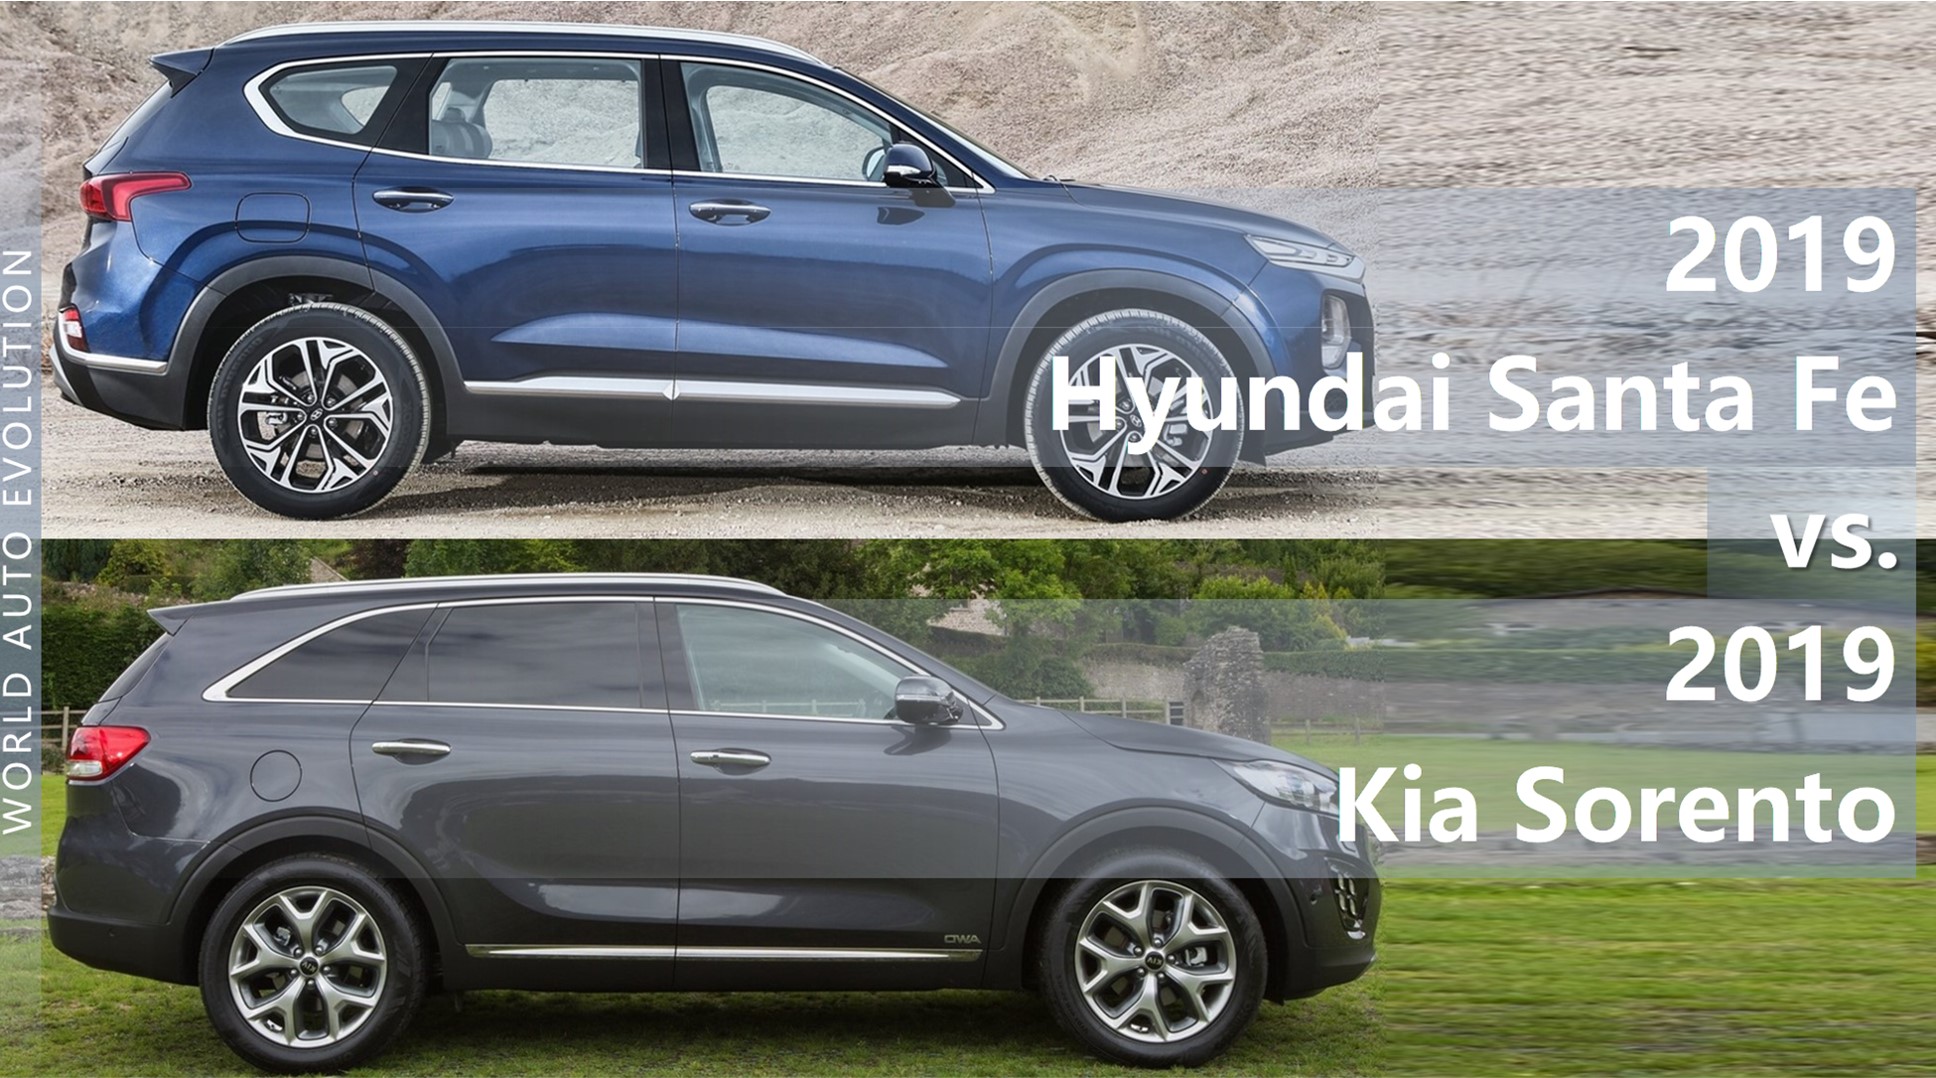 Hyundai Santa Fe Vs Kia Sorento 2019 Small Technical Differences